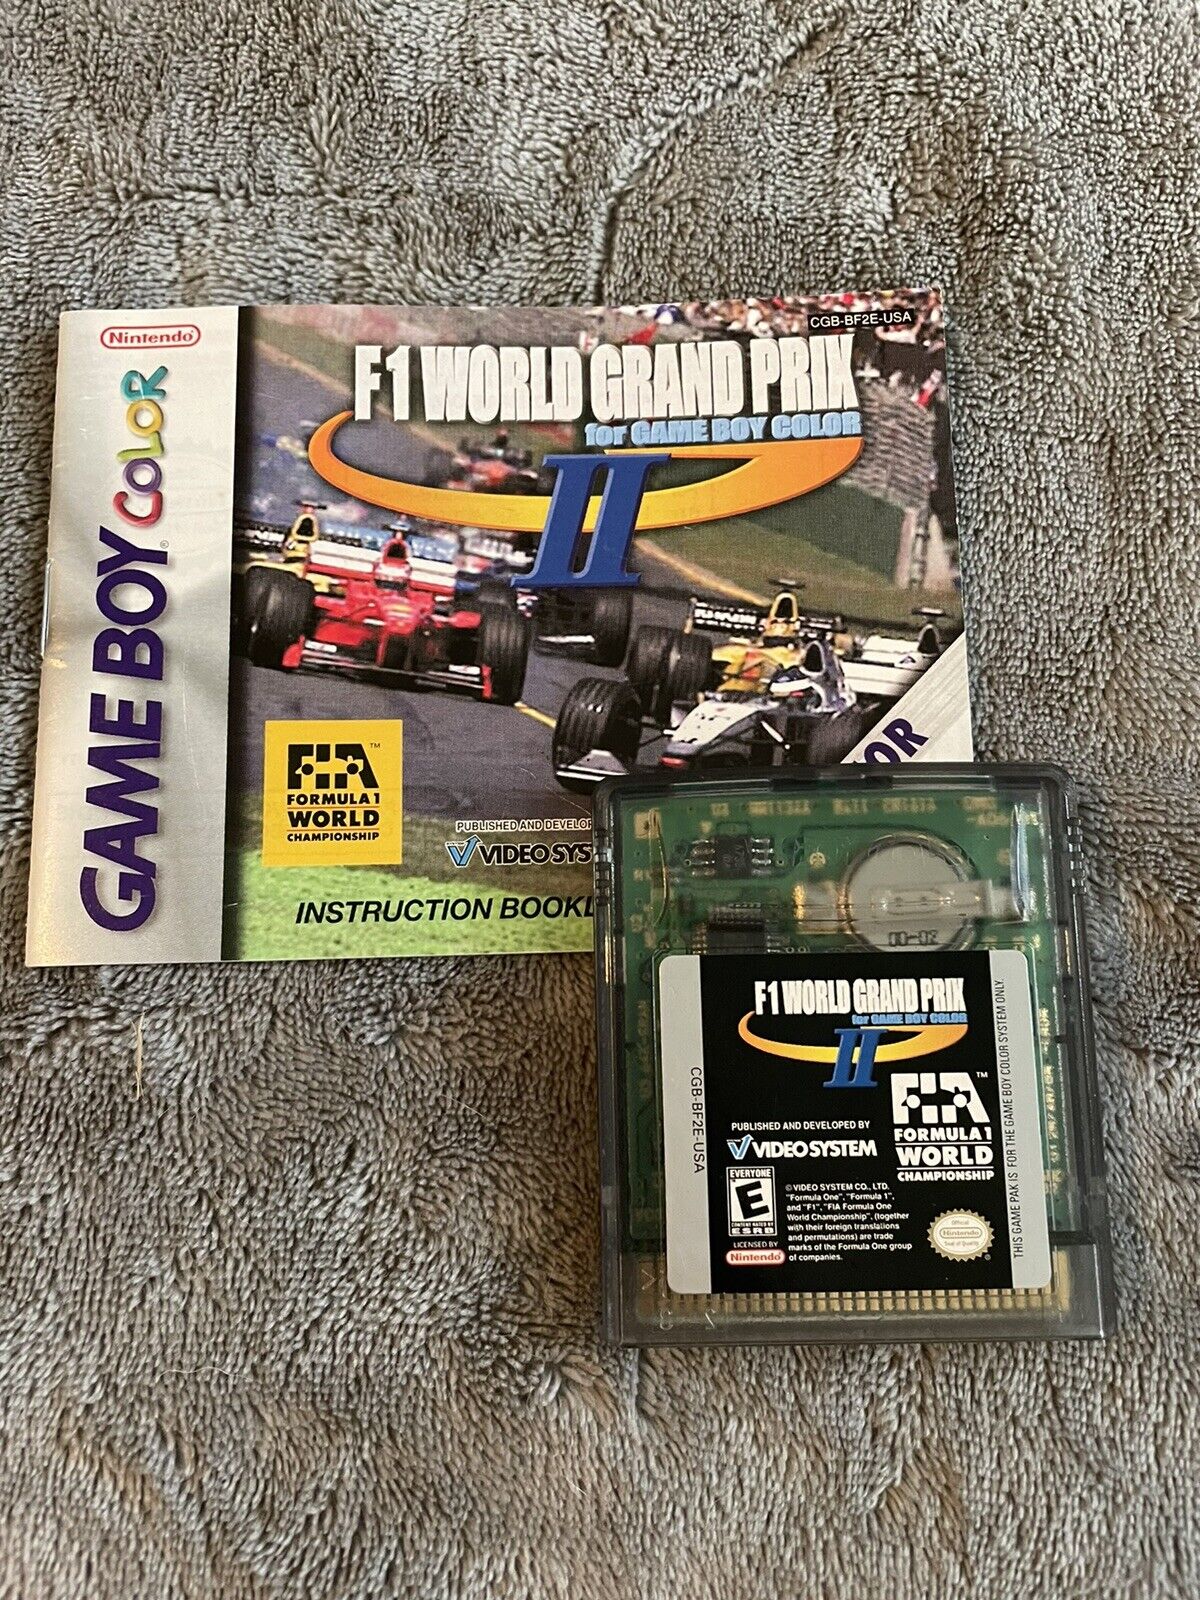 F1 World Grand Prix II 2(Nintendo Game Boy Color) Game Cartridge amp;  Booklet eBay